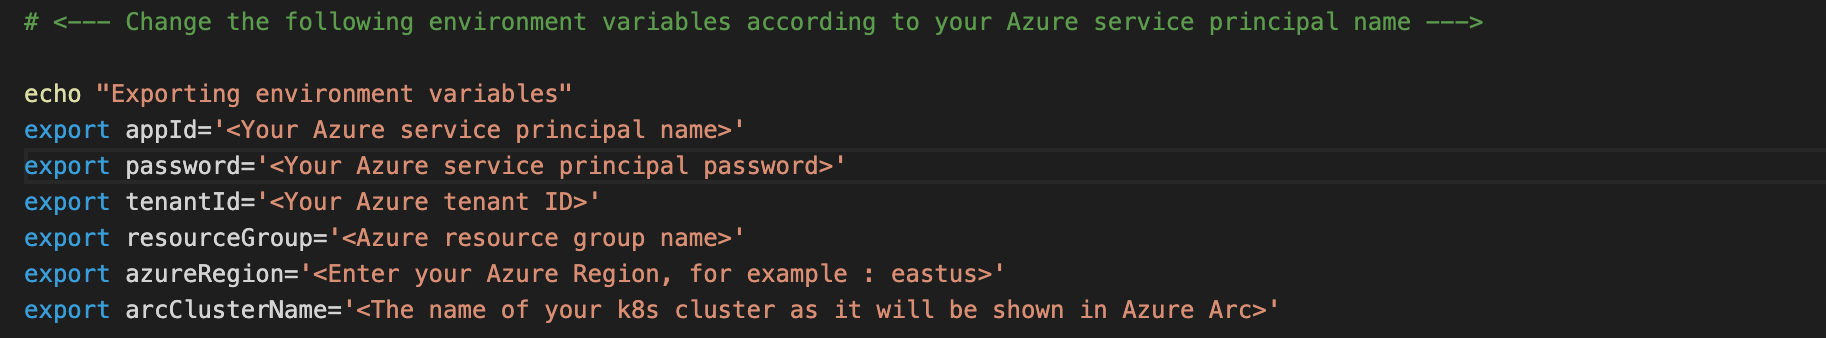 Screenshot of Azure variables